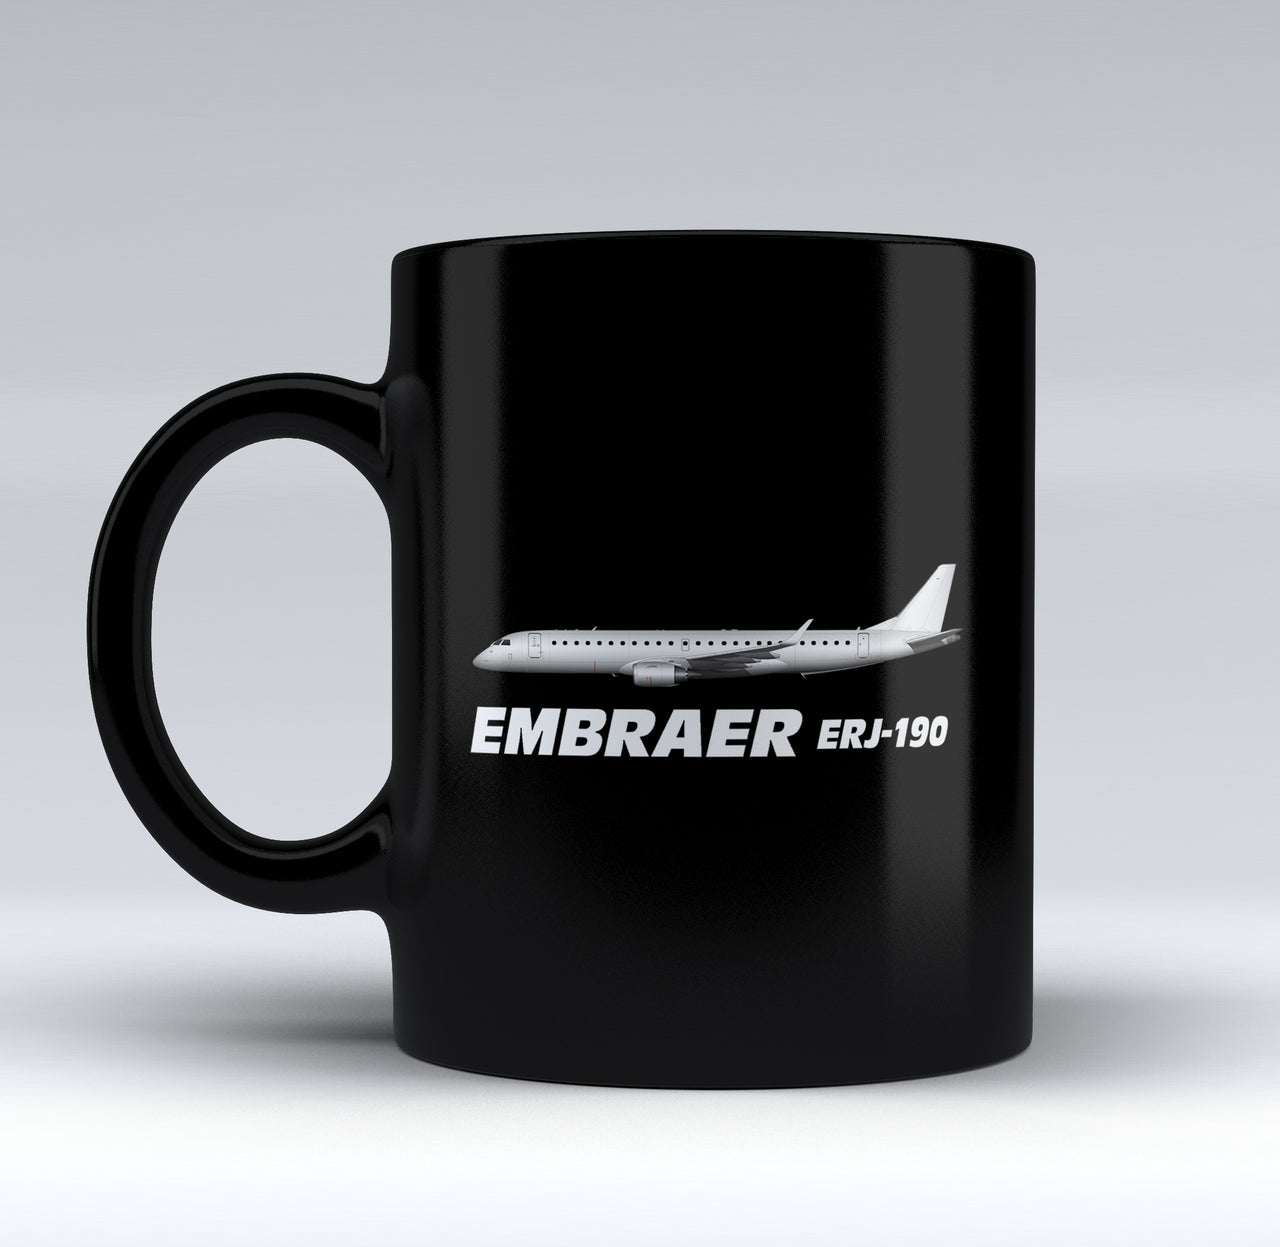 The Embraer ERJ-190 Designed Black Mugs